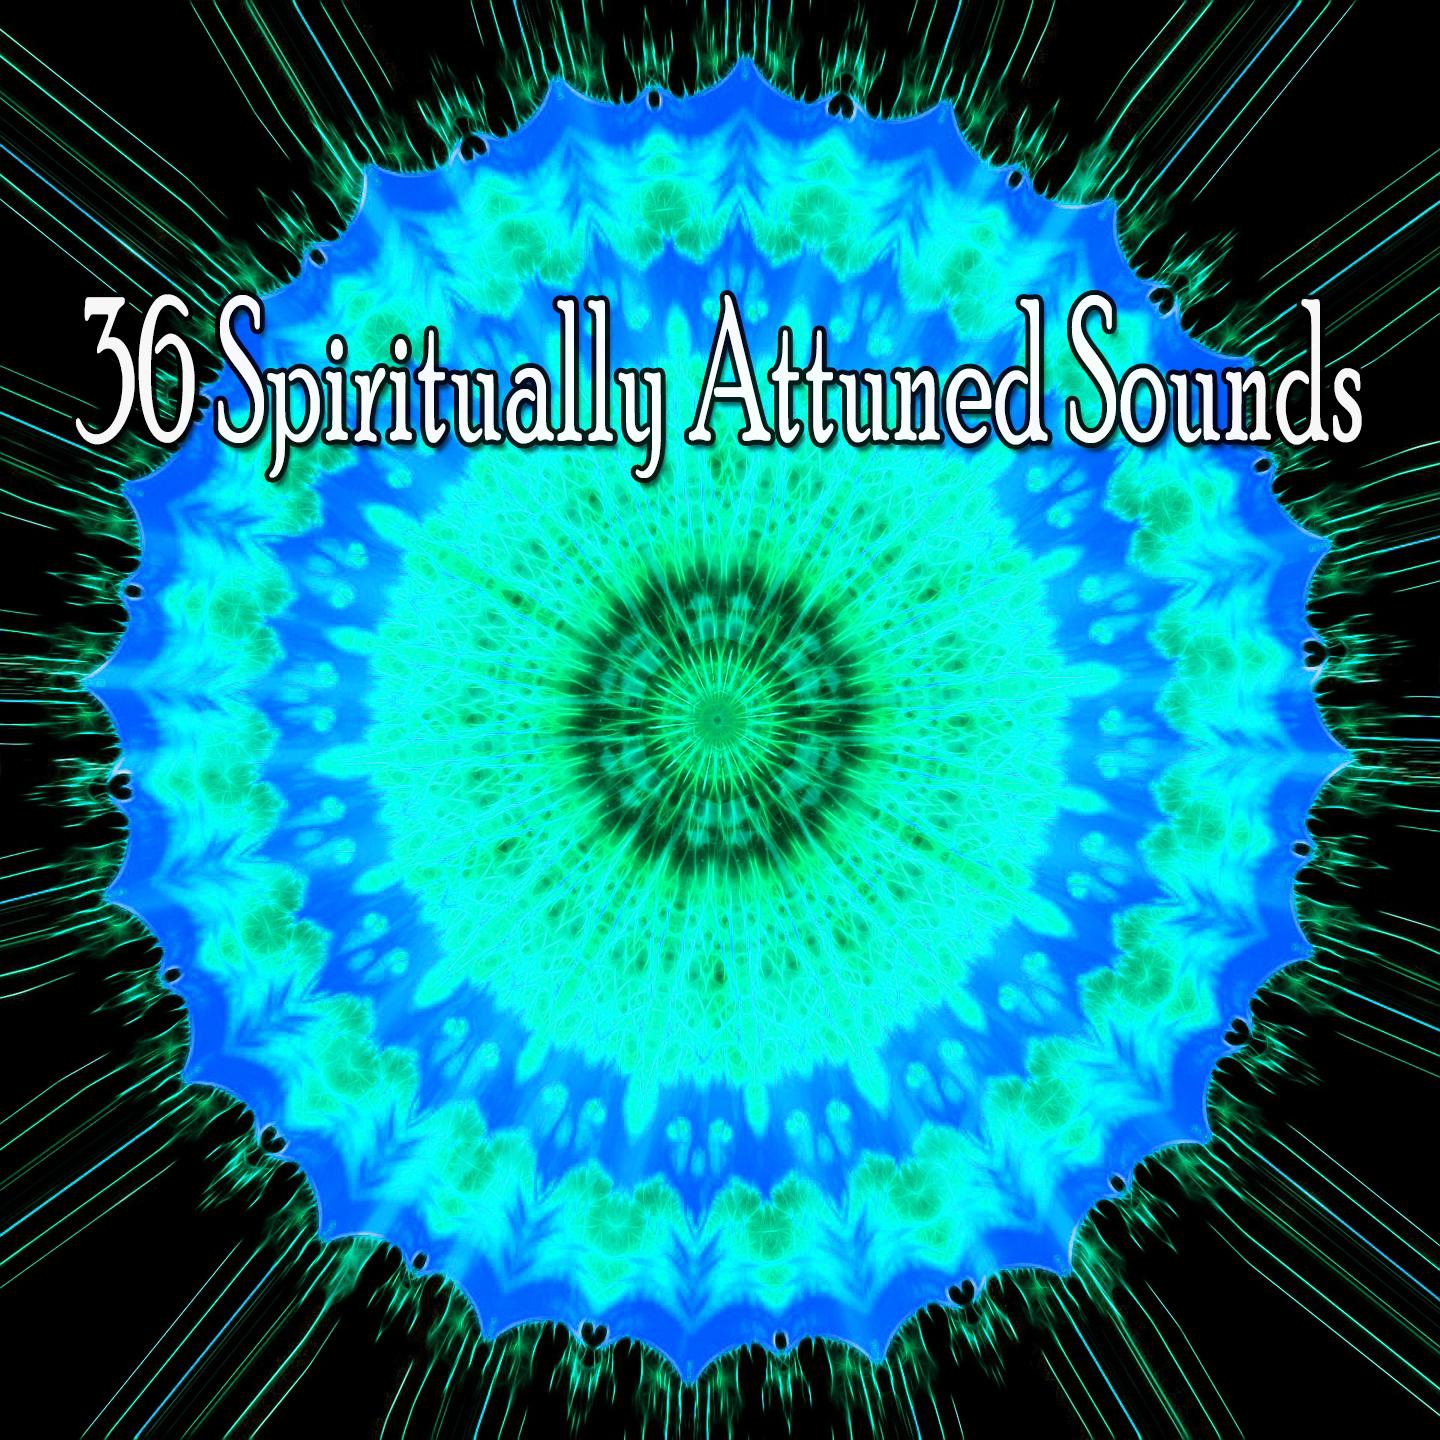 36 Spiritually Attuned Sounds